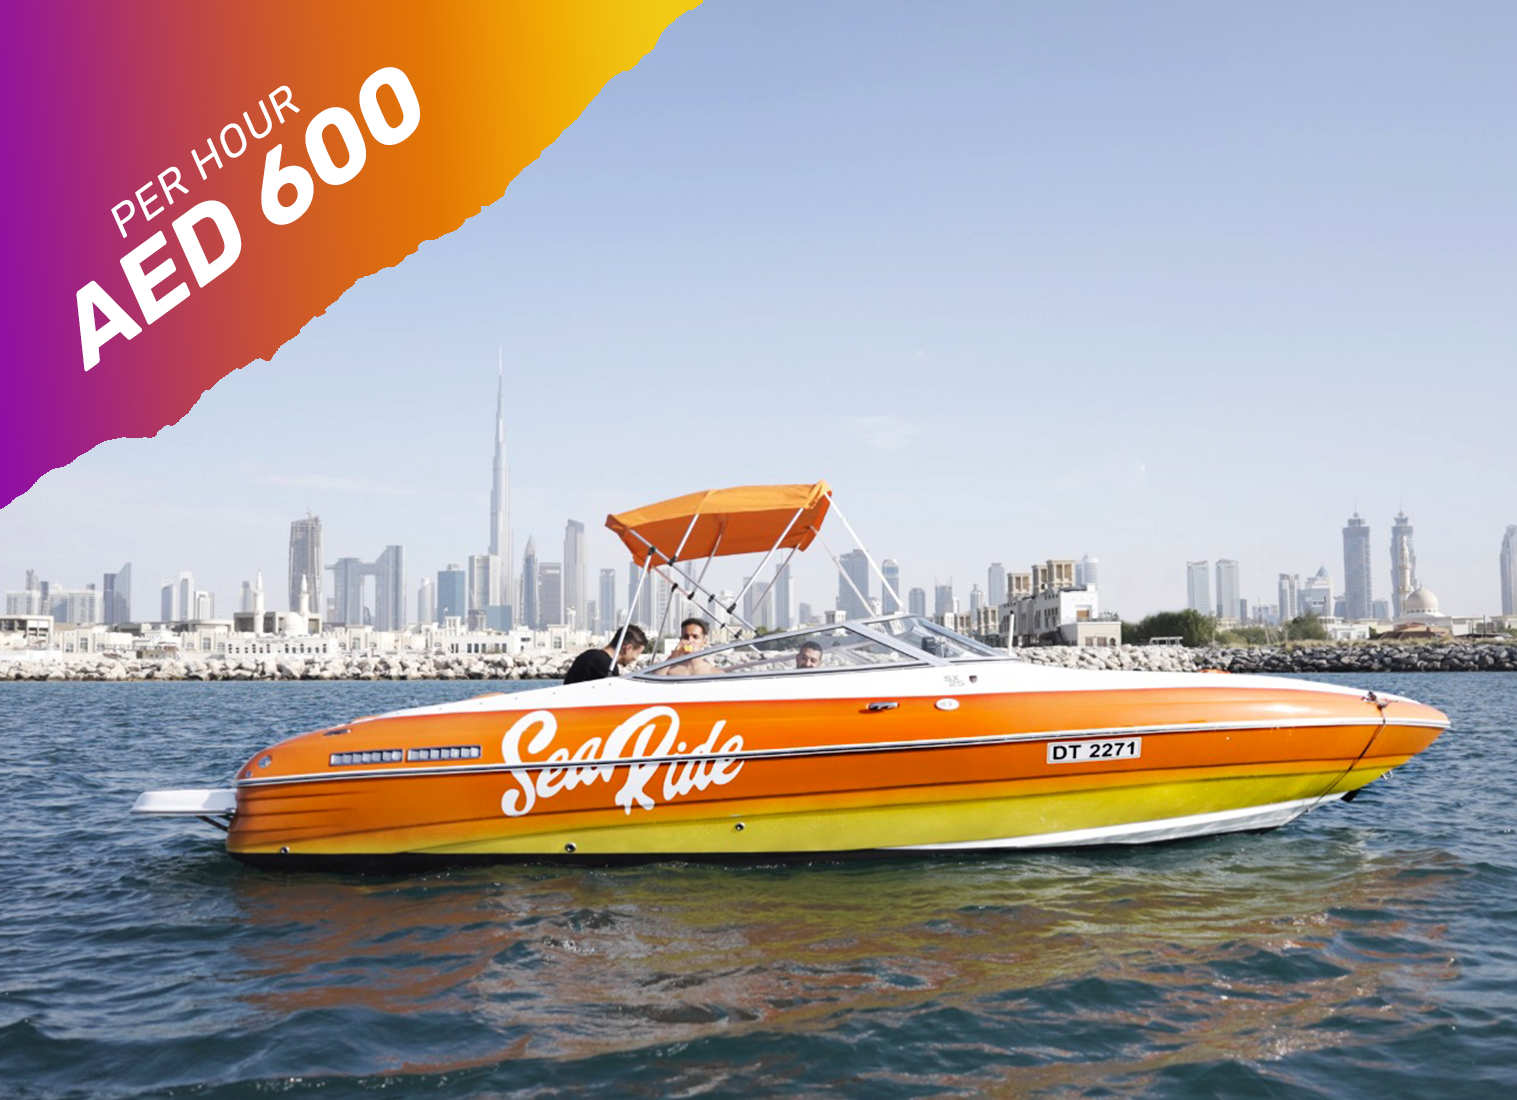 orange color boat in dubai ocean - searide boat